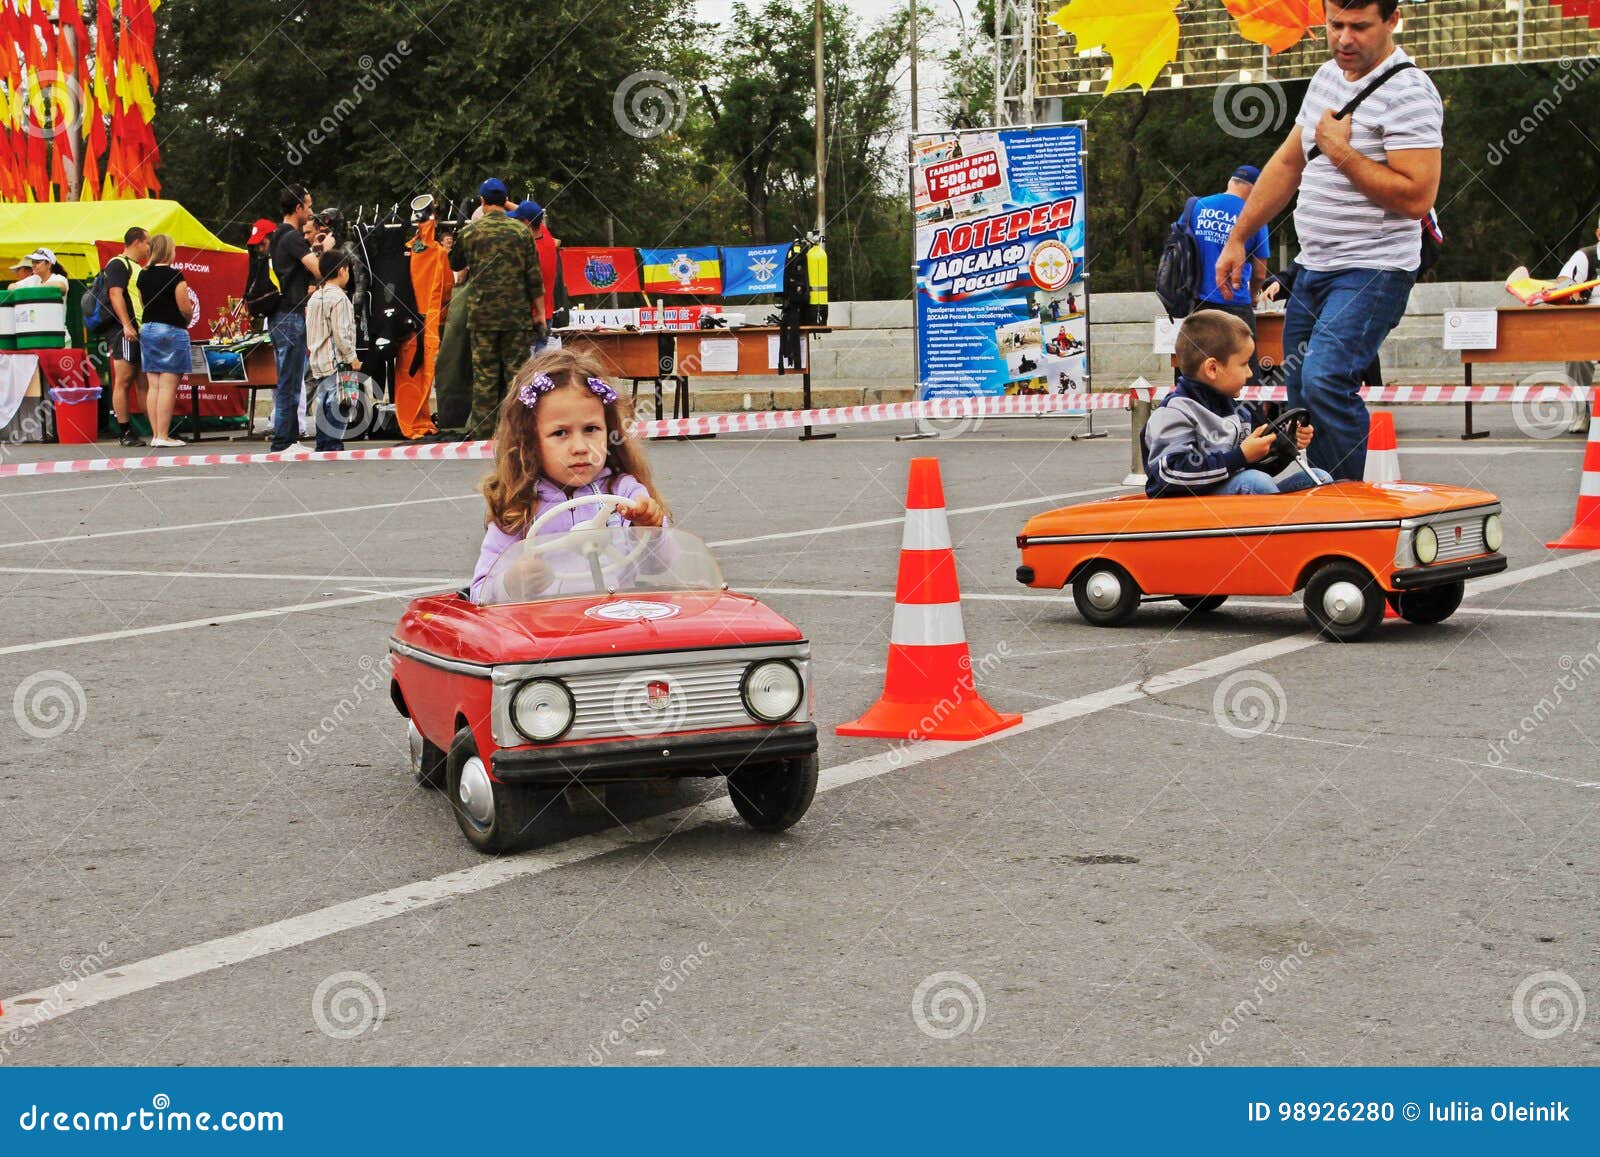 children-driving-soviet-pedal-cars-moskvich-city-day-volgograd-russia-august-98926280.jpg